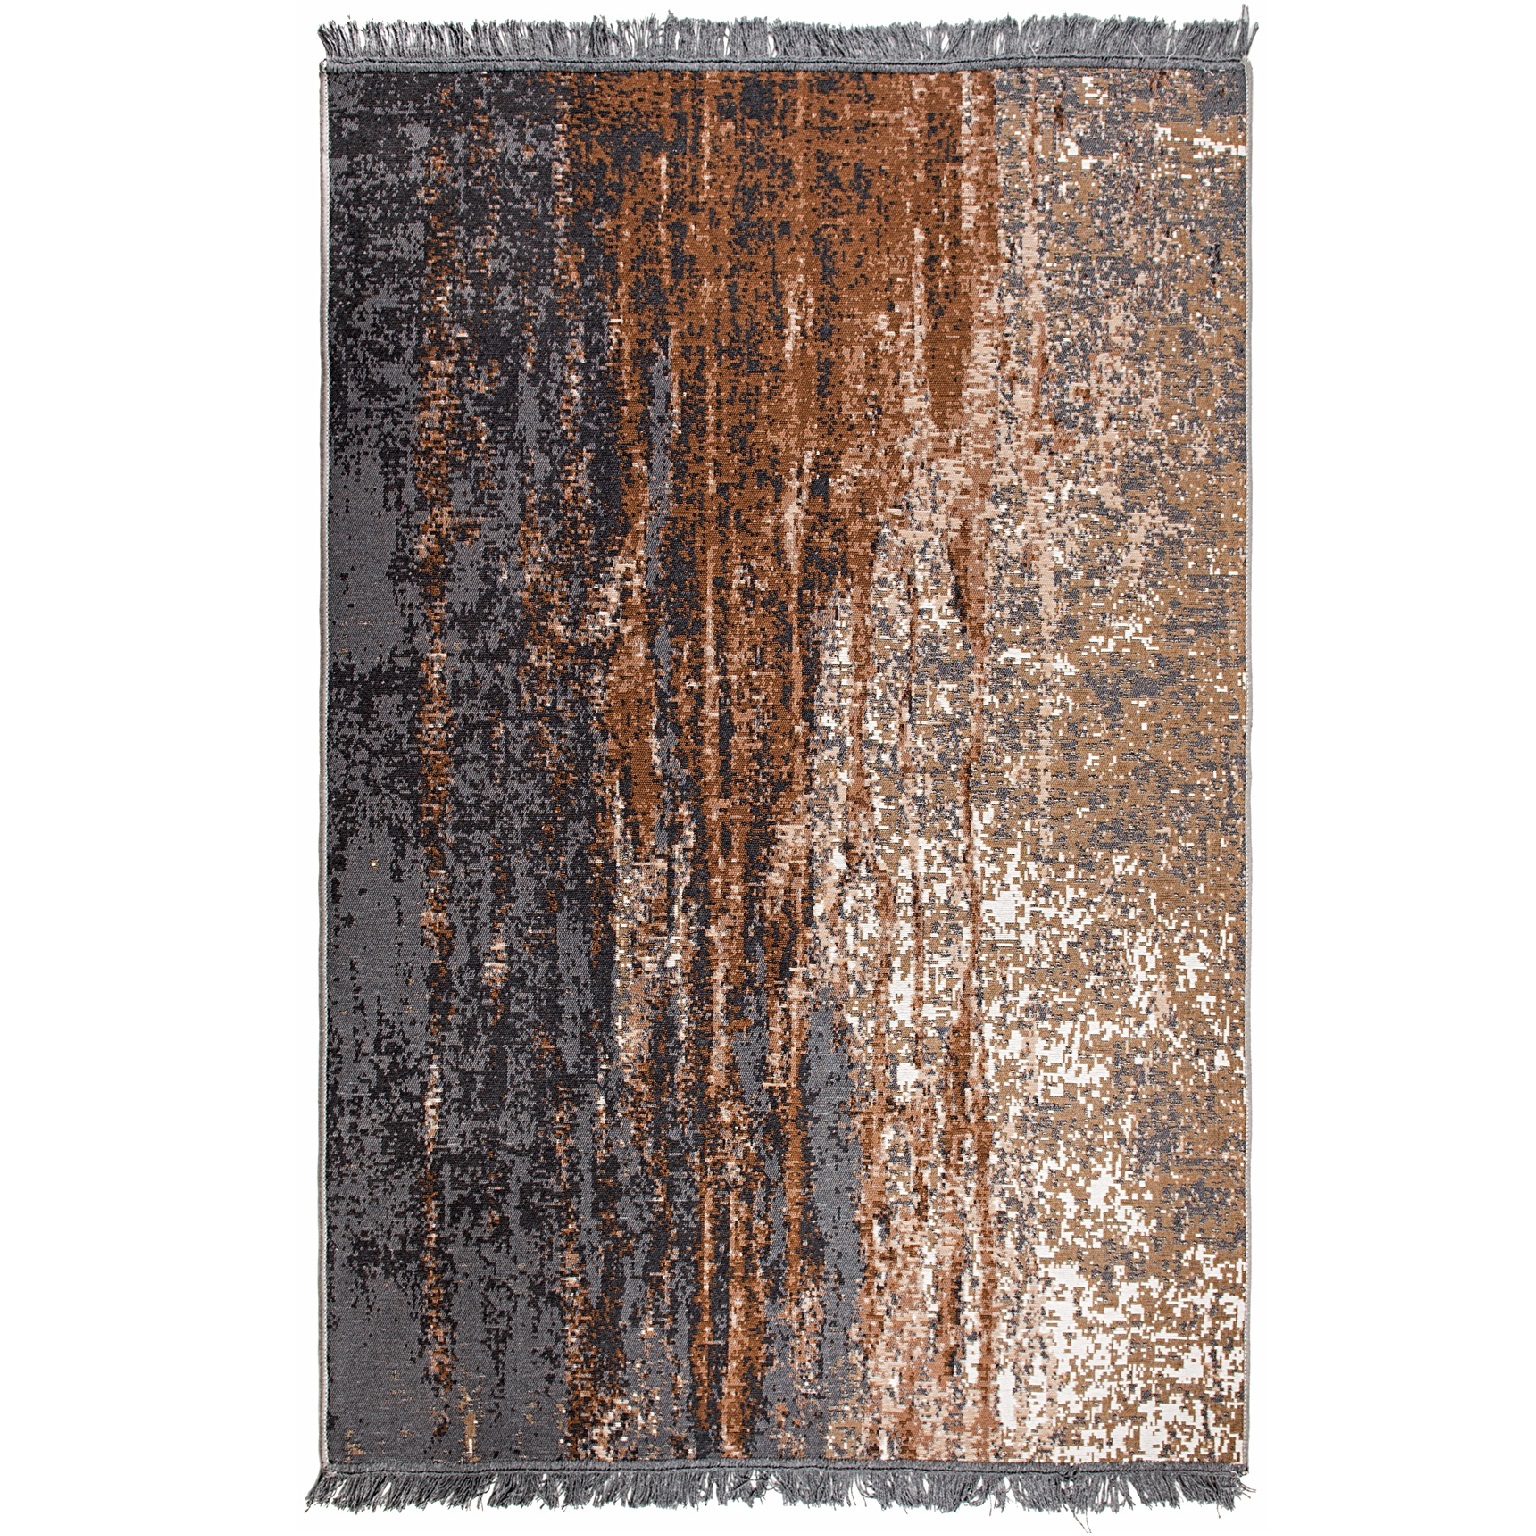 Ковер Izzihome Albeni Gri Alb4, 120х180 см, серо-коричневый (201ABGRA43182) - фото 1